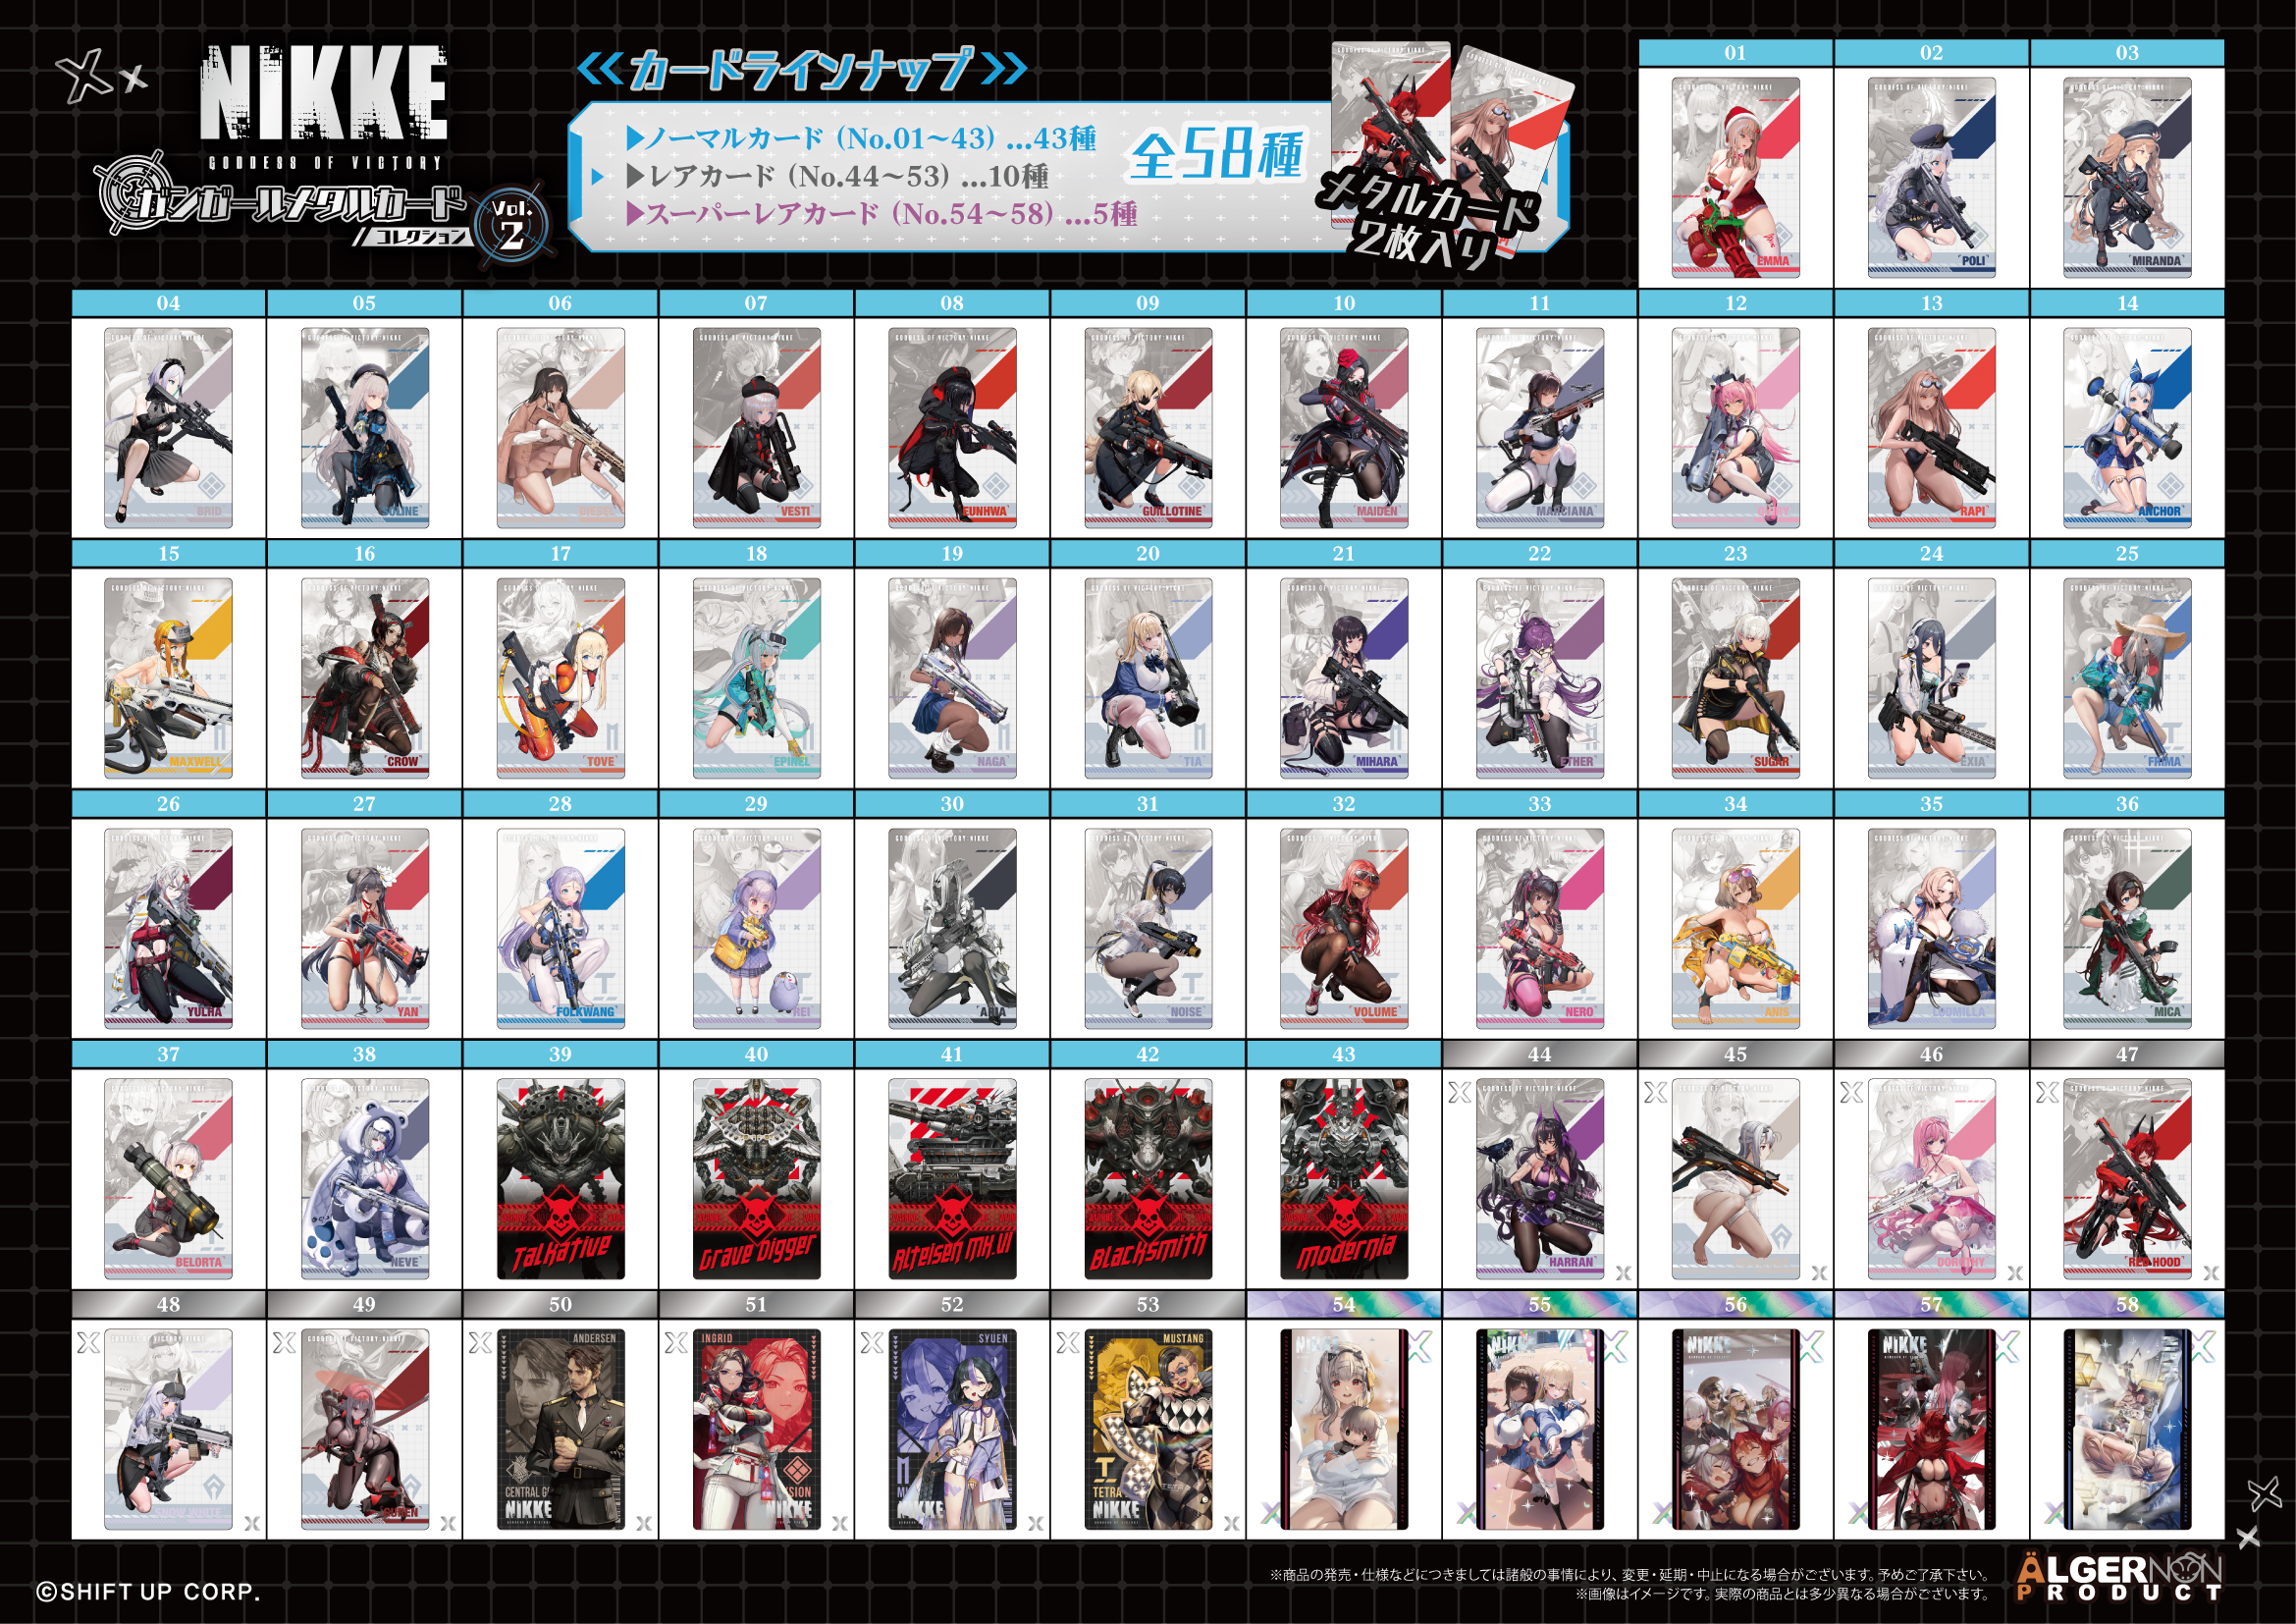 NIKKE ガンガールメタルカードコレクション Vol.2 | 株式会社 